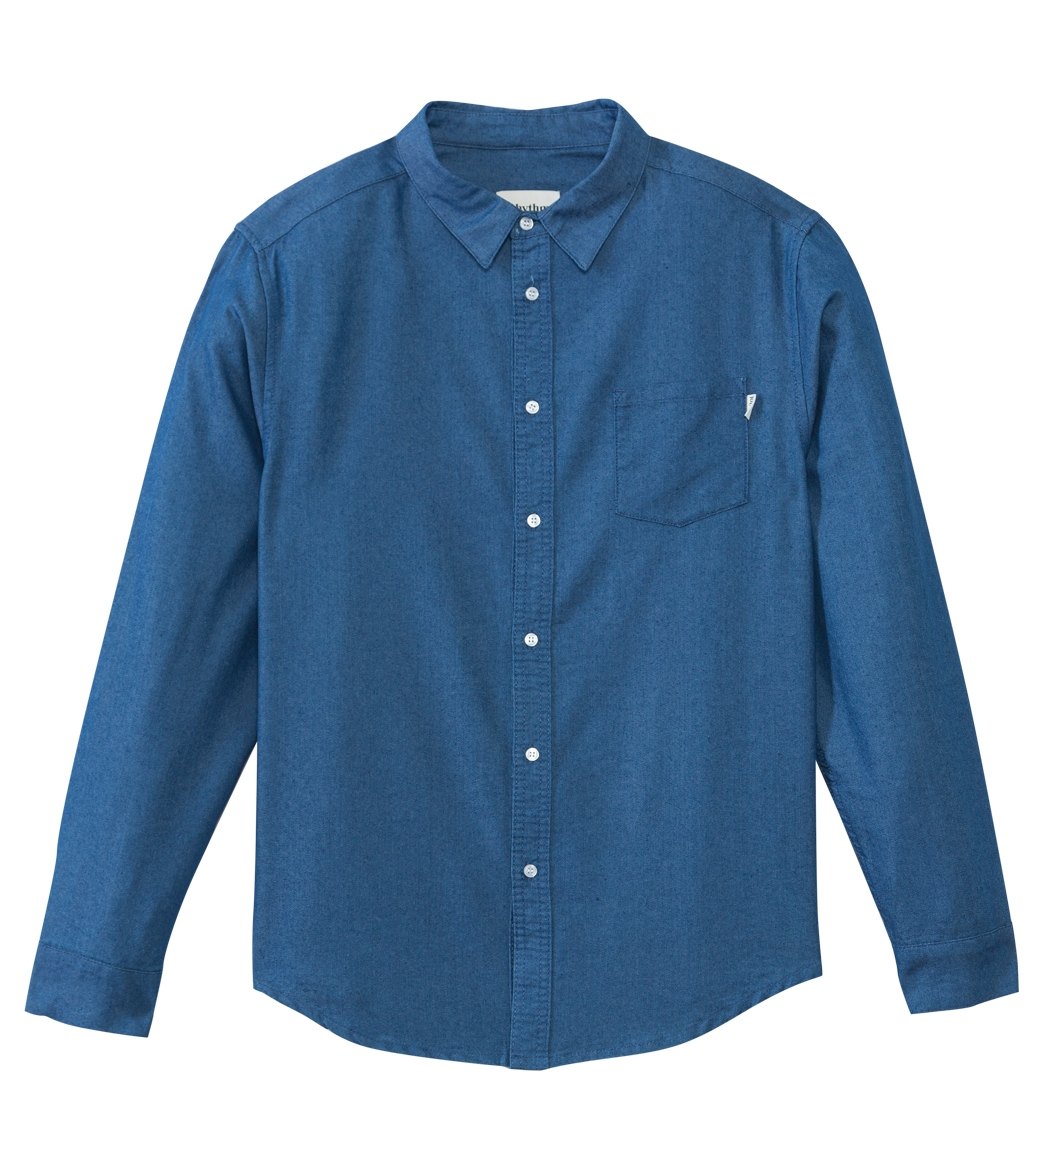 Rhythm Men's Willow Chambray Long Sleeve Shirt - Indigo Blue Small Cotton - Swimoutlet.com